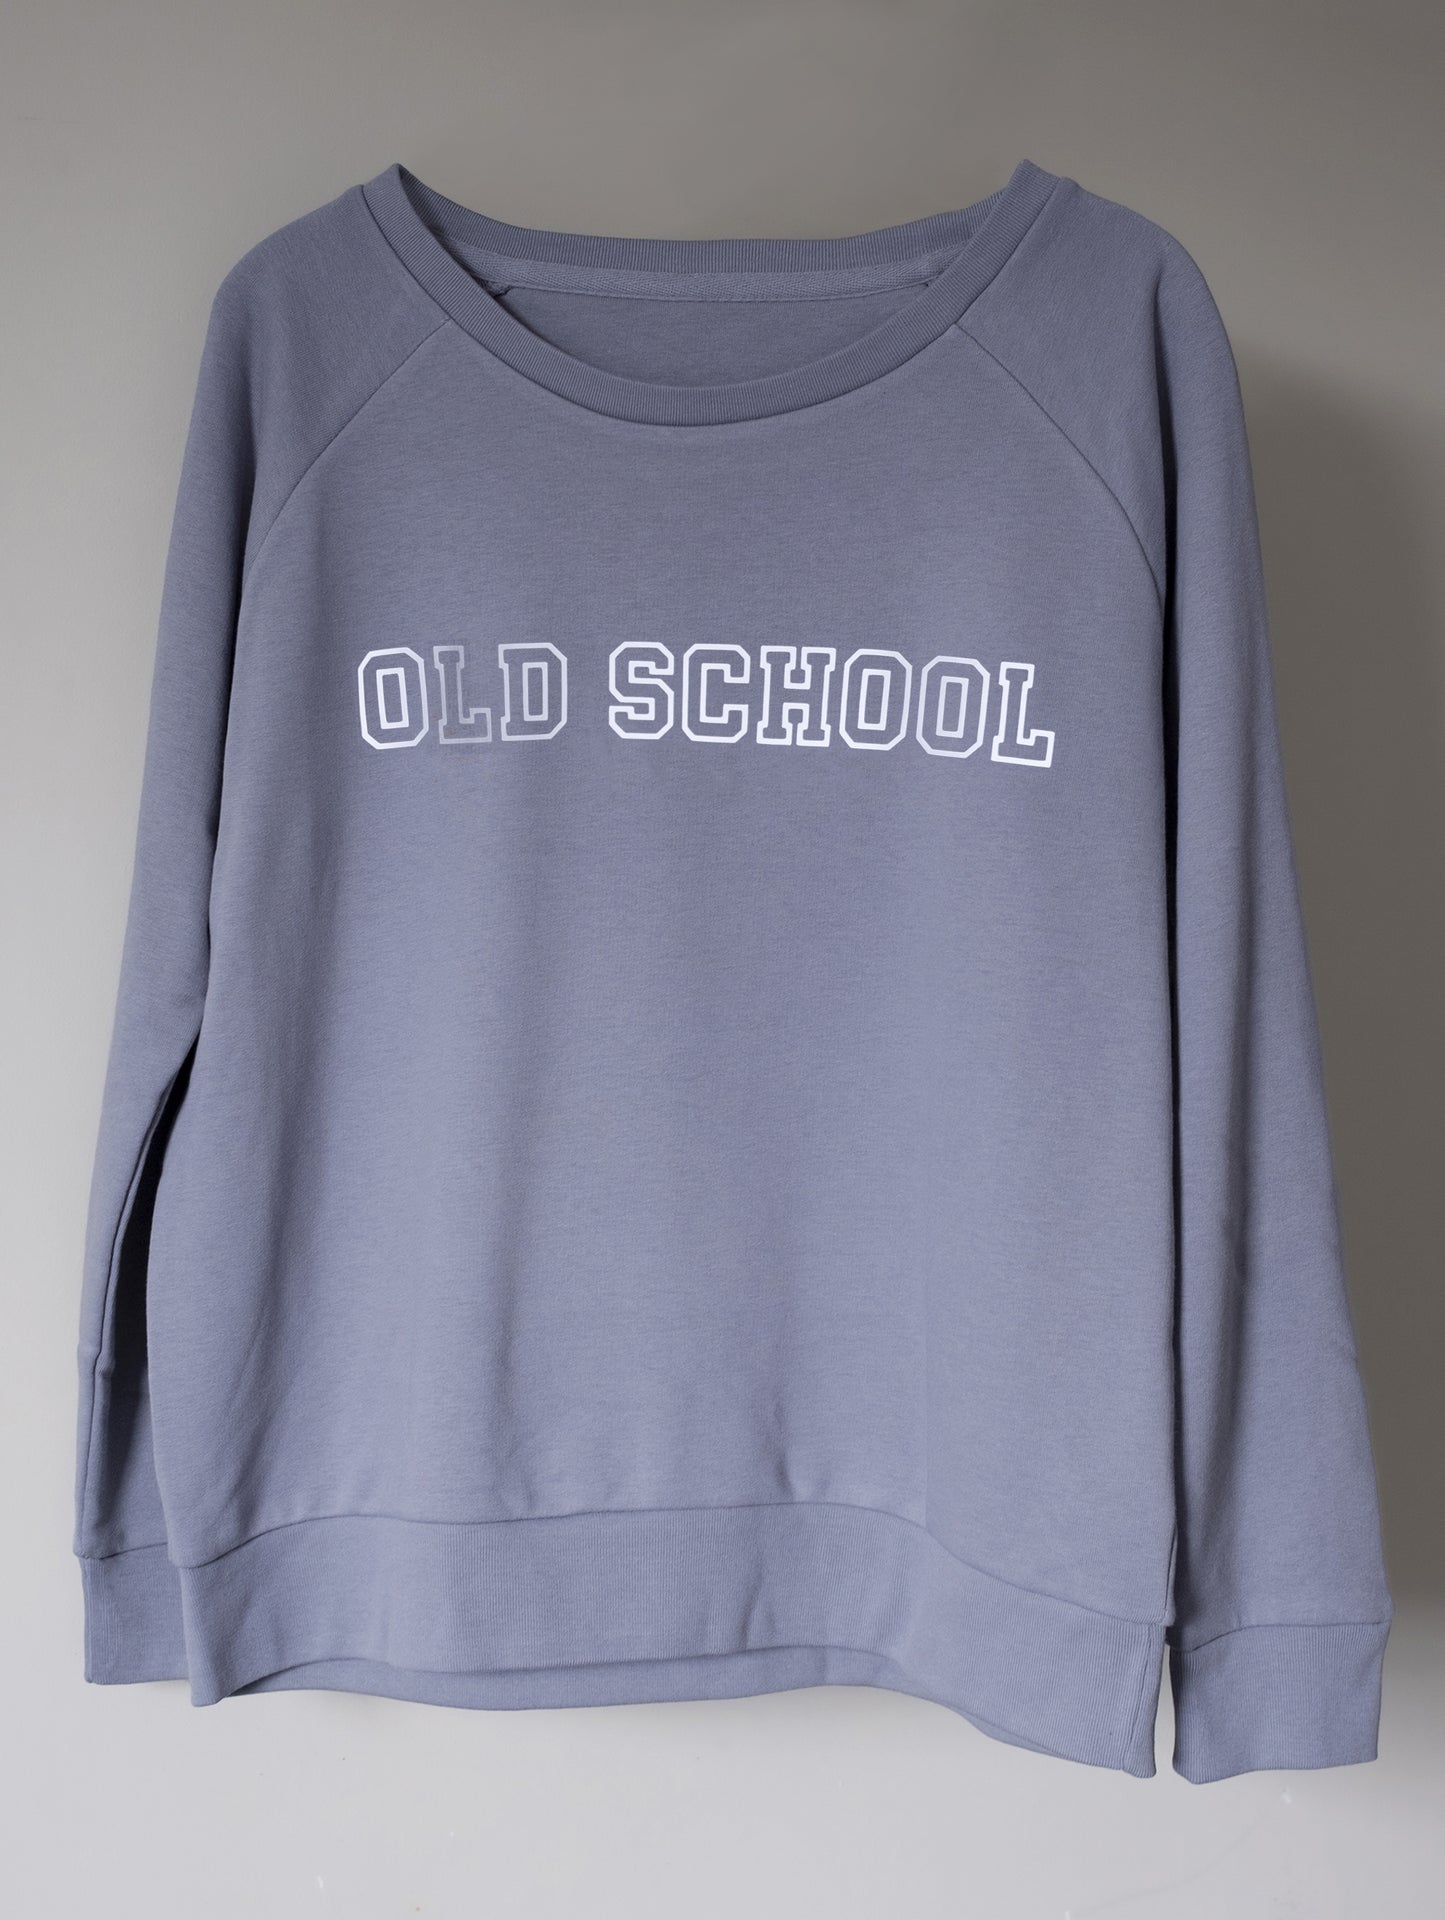 Old School sweatshirt